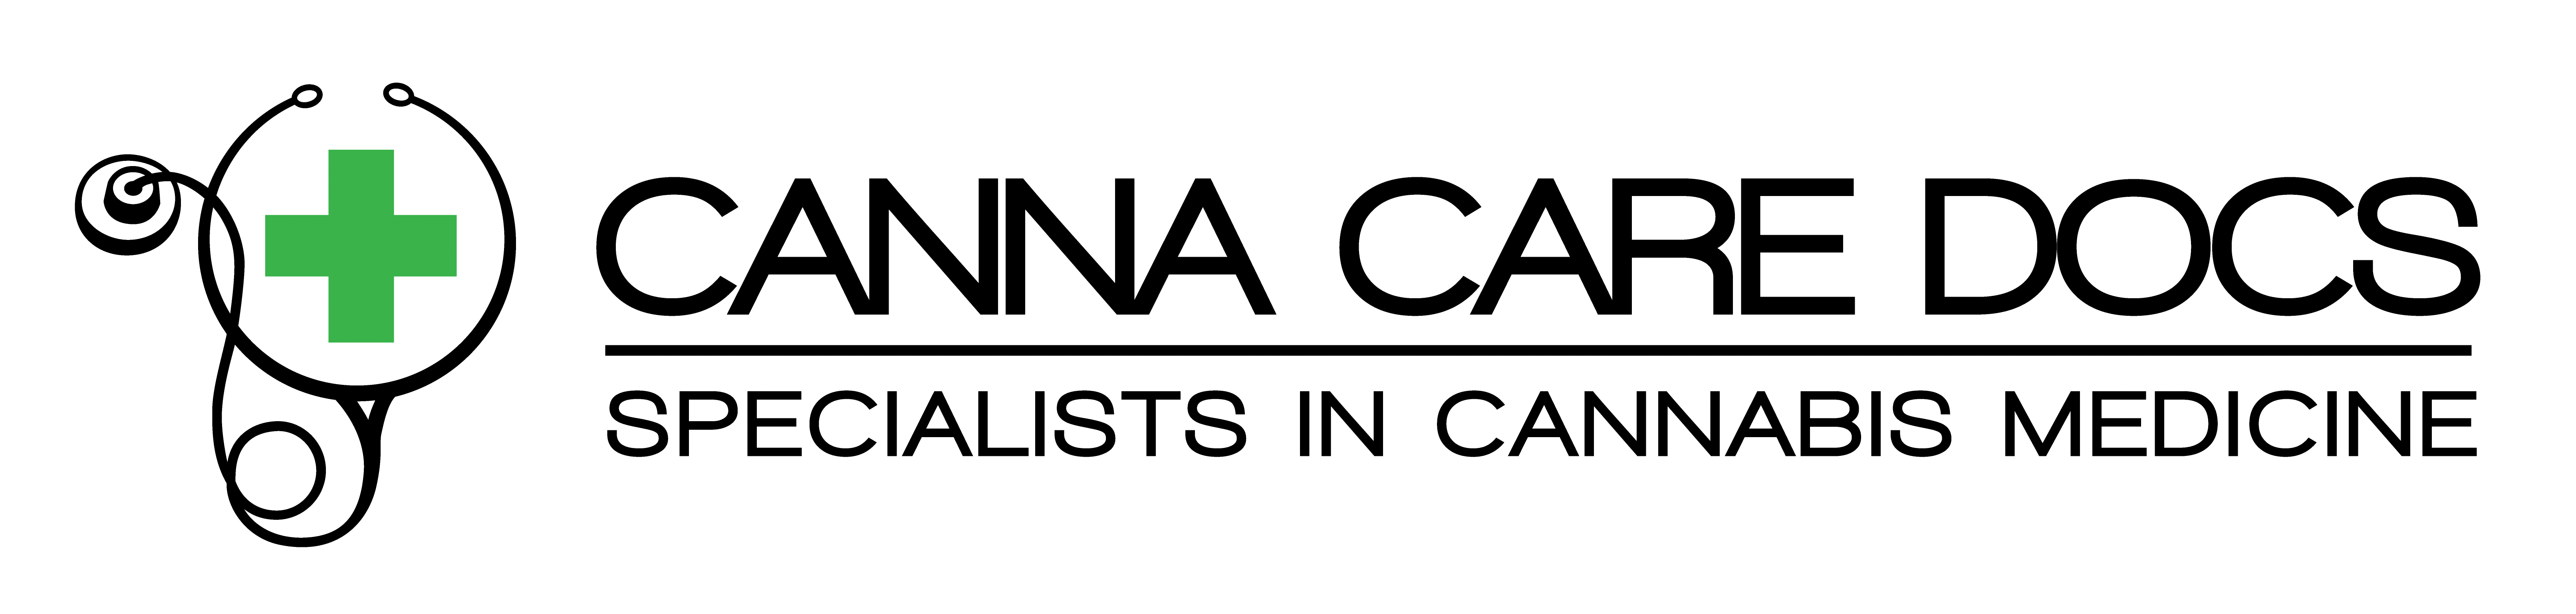 CCD-logo.png